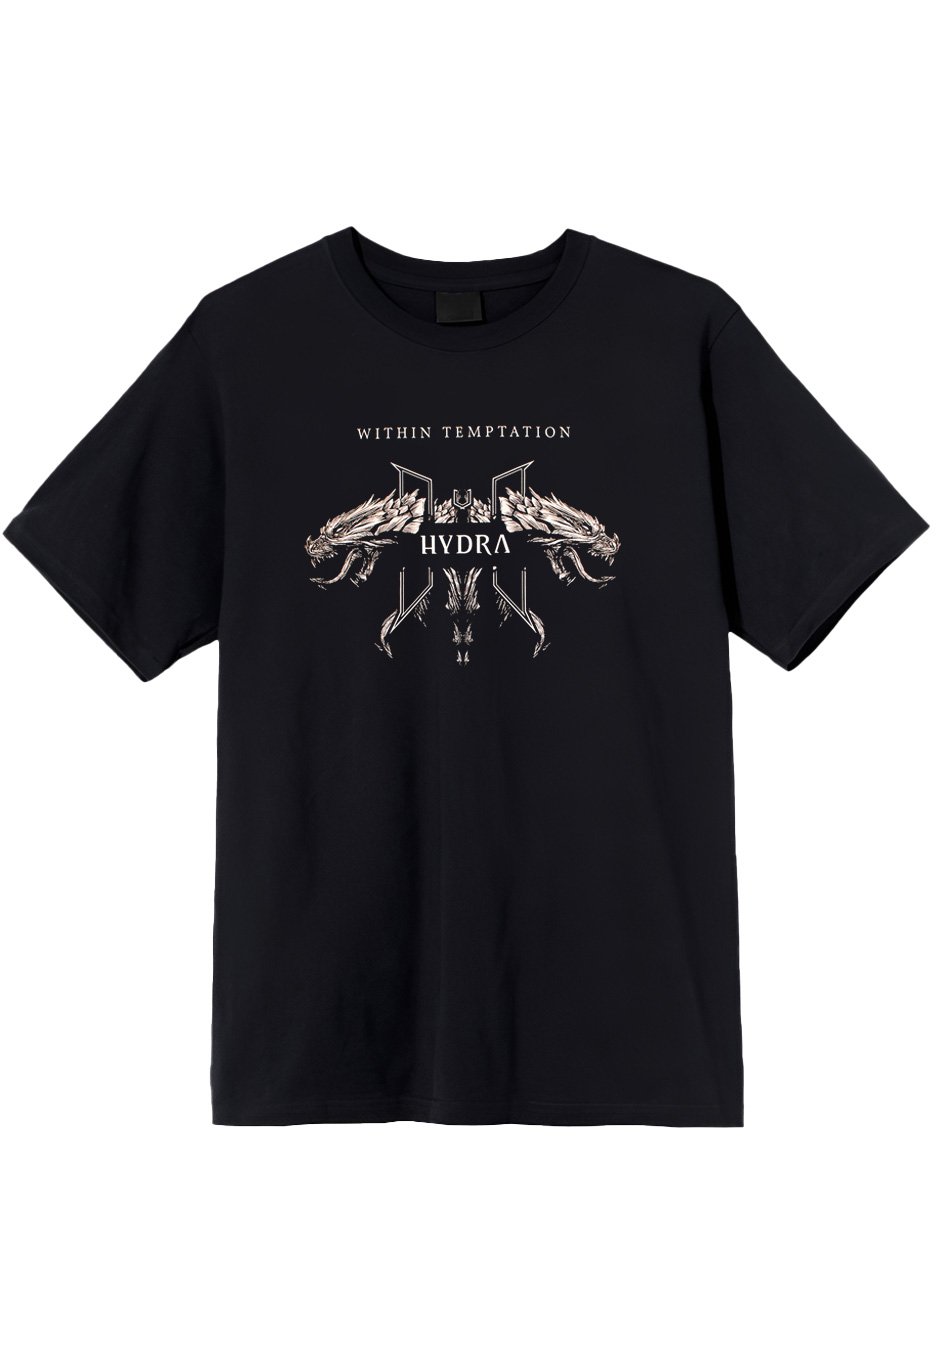 Within Temptation - Hydra - T-Shirt